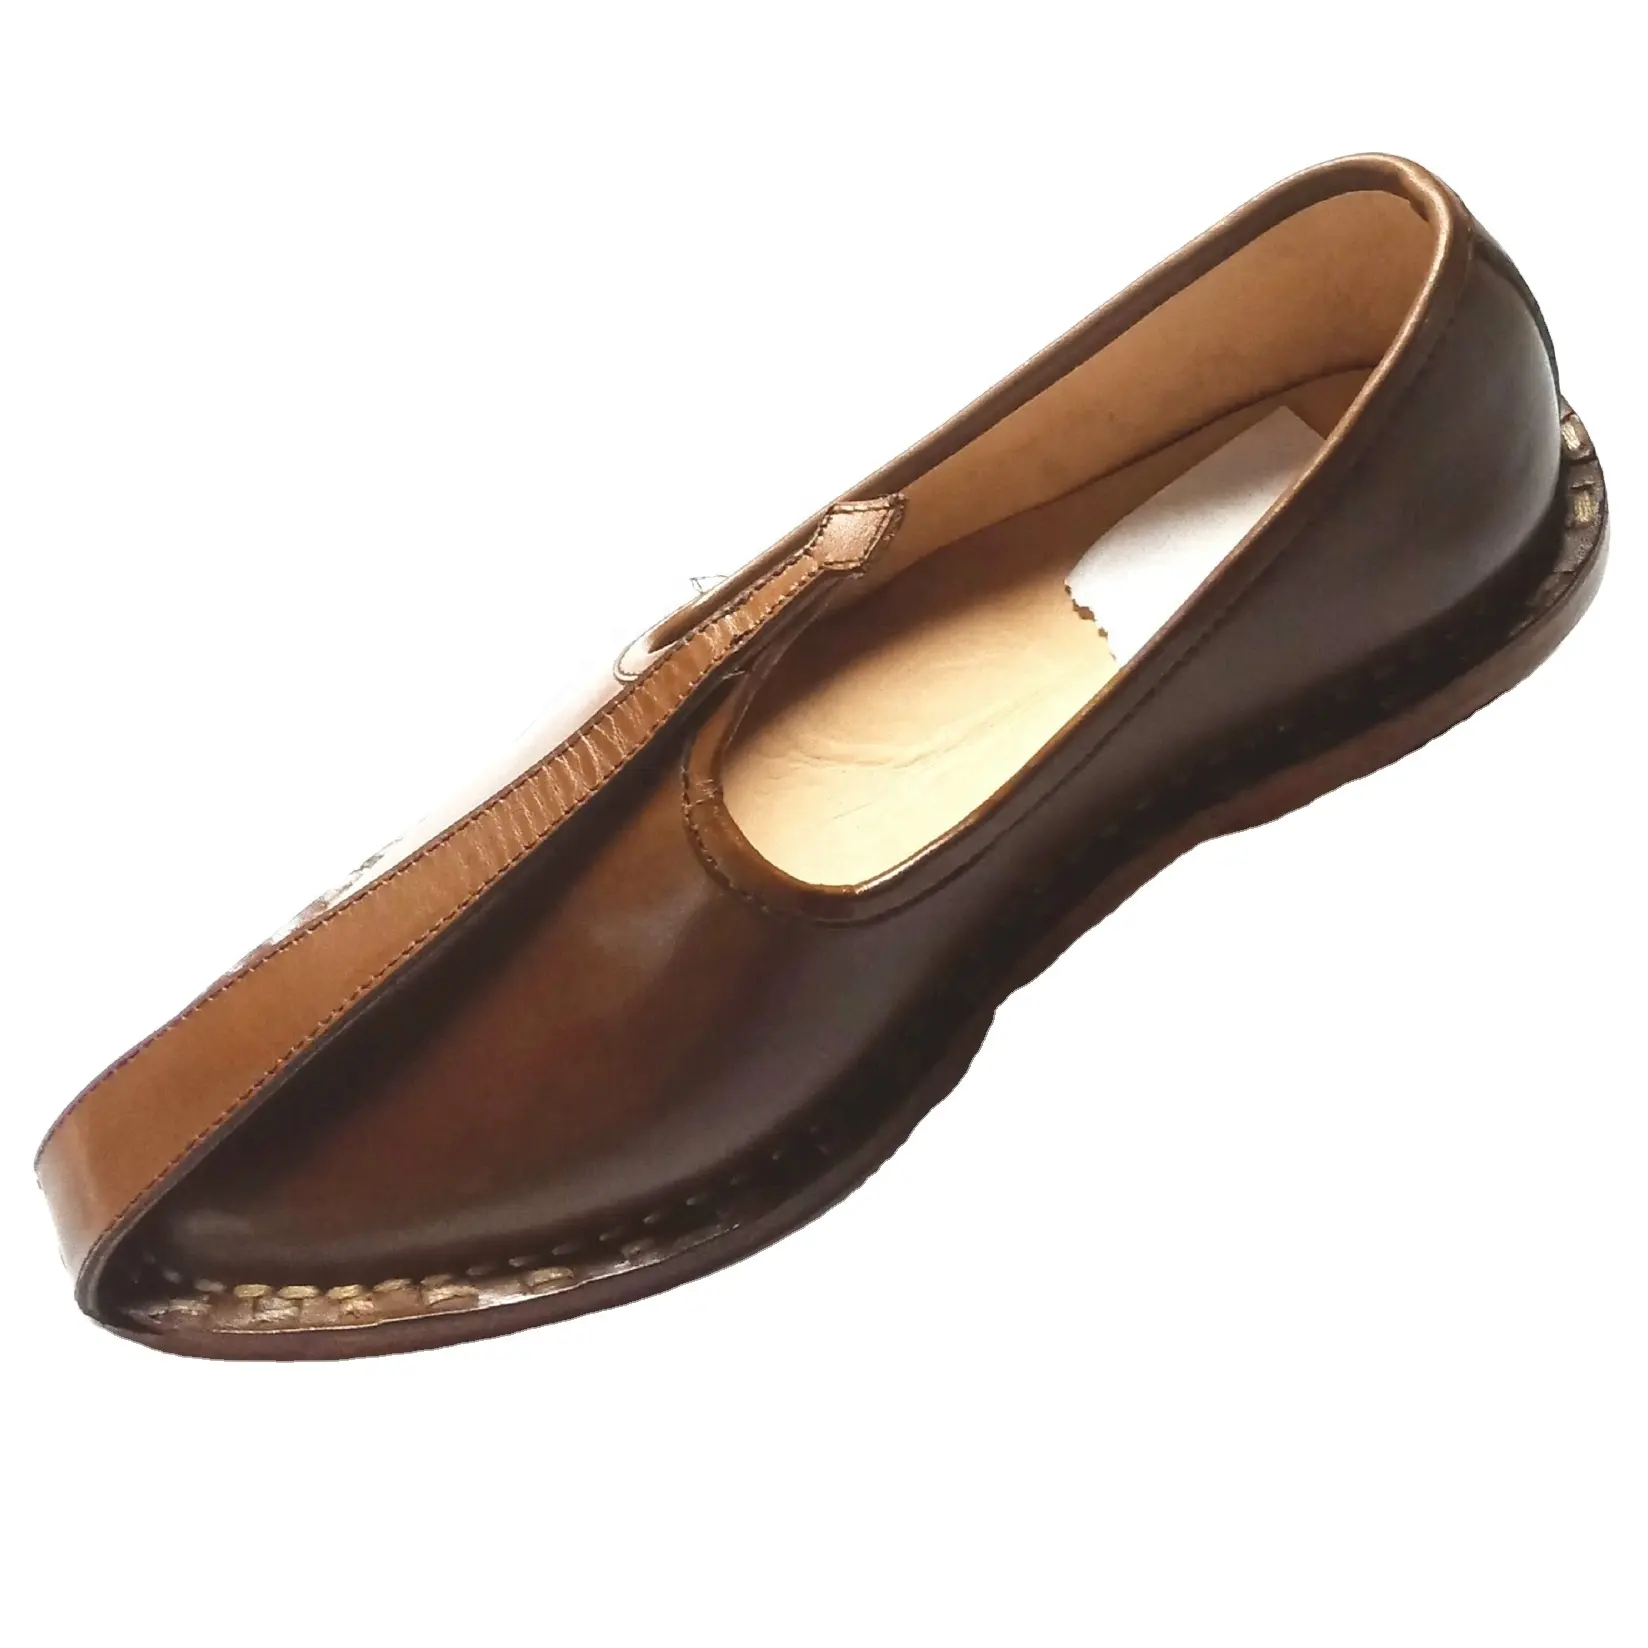 Nagra sapatos masculinos de couro, mocassim de couro tpr, sola de borracha formal, puro sapato original